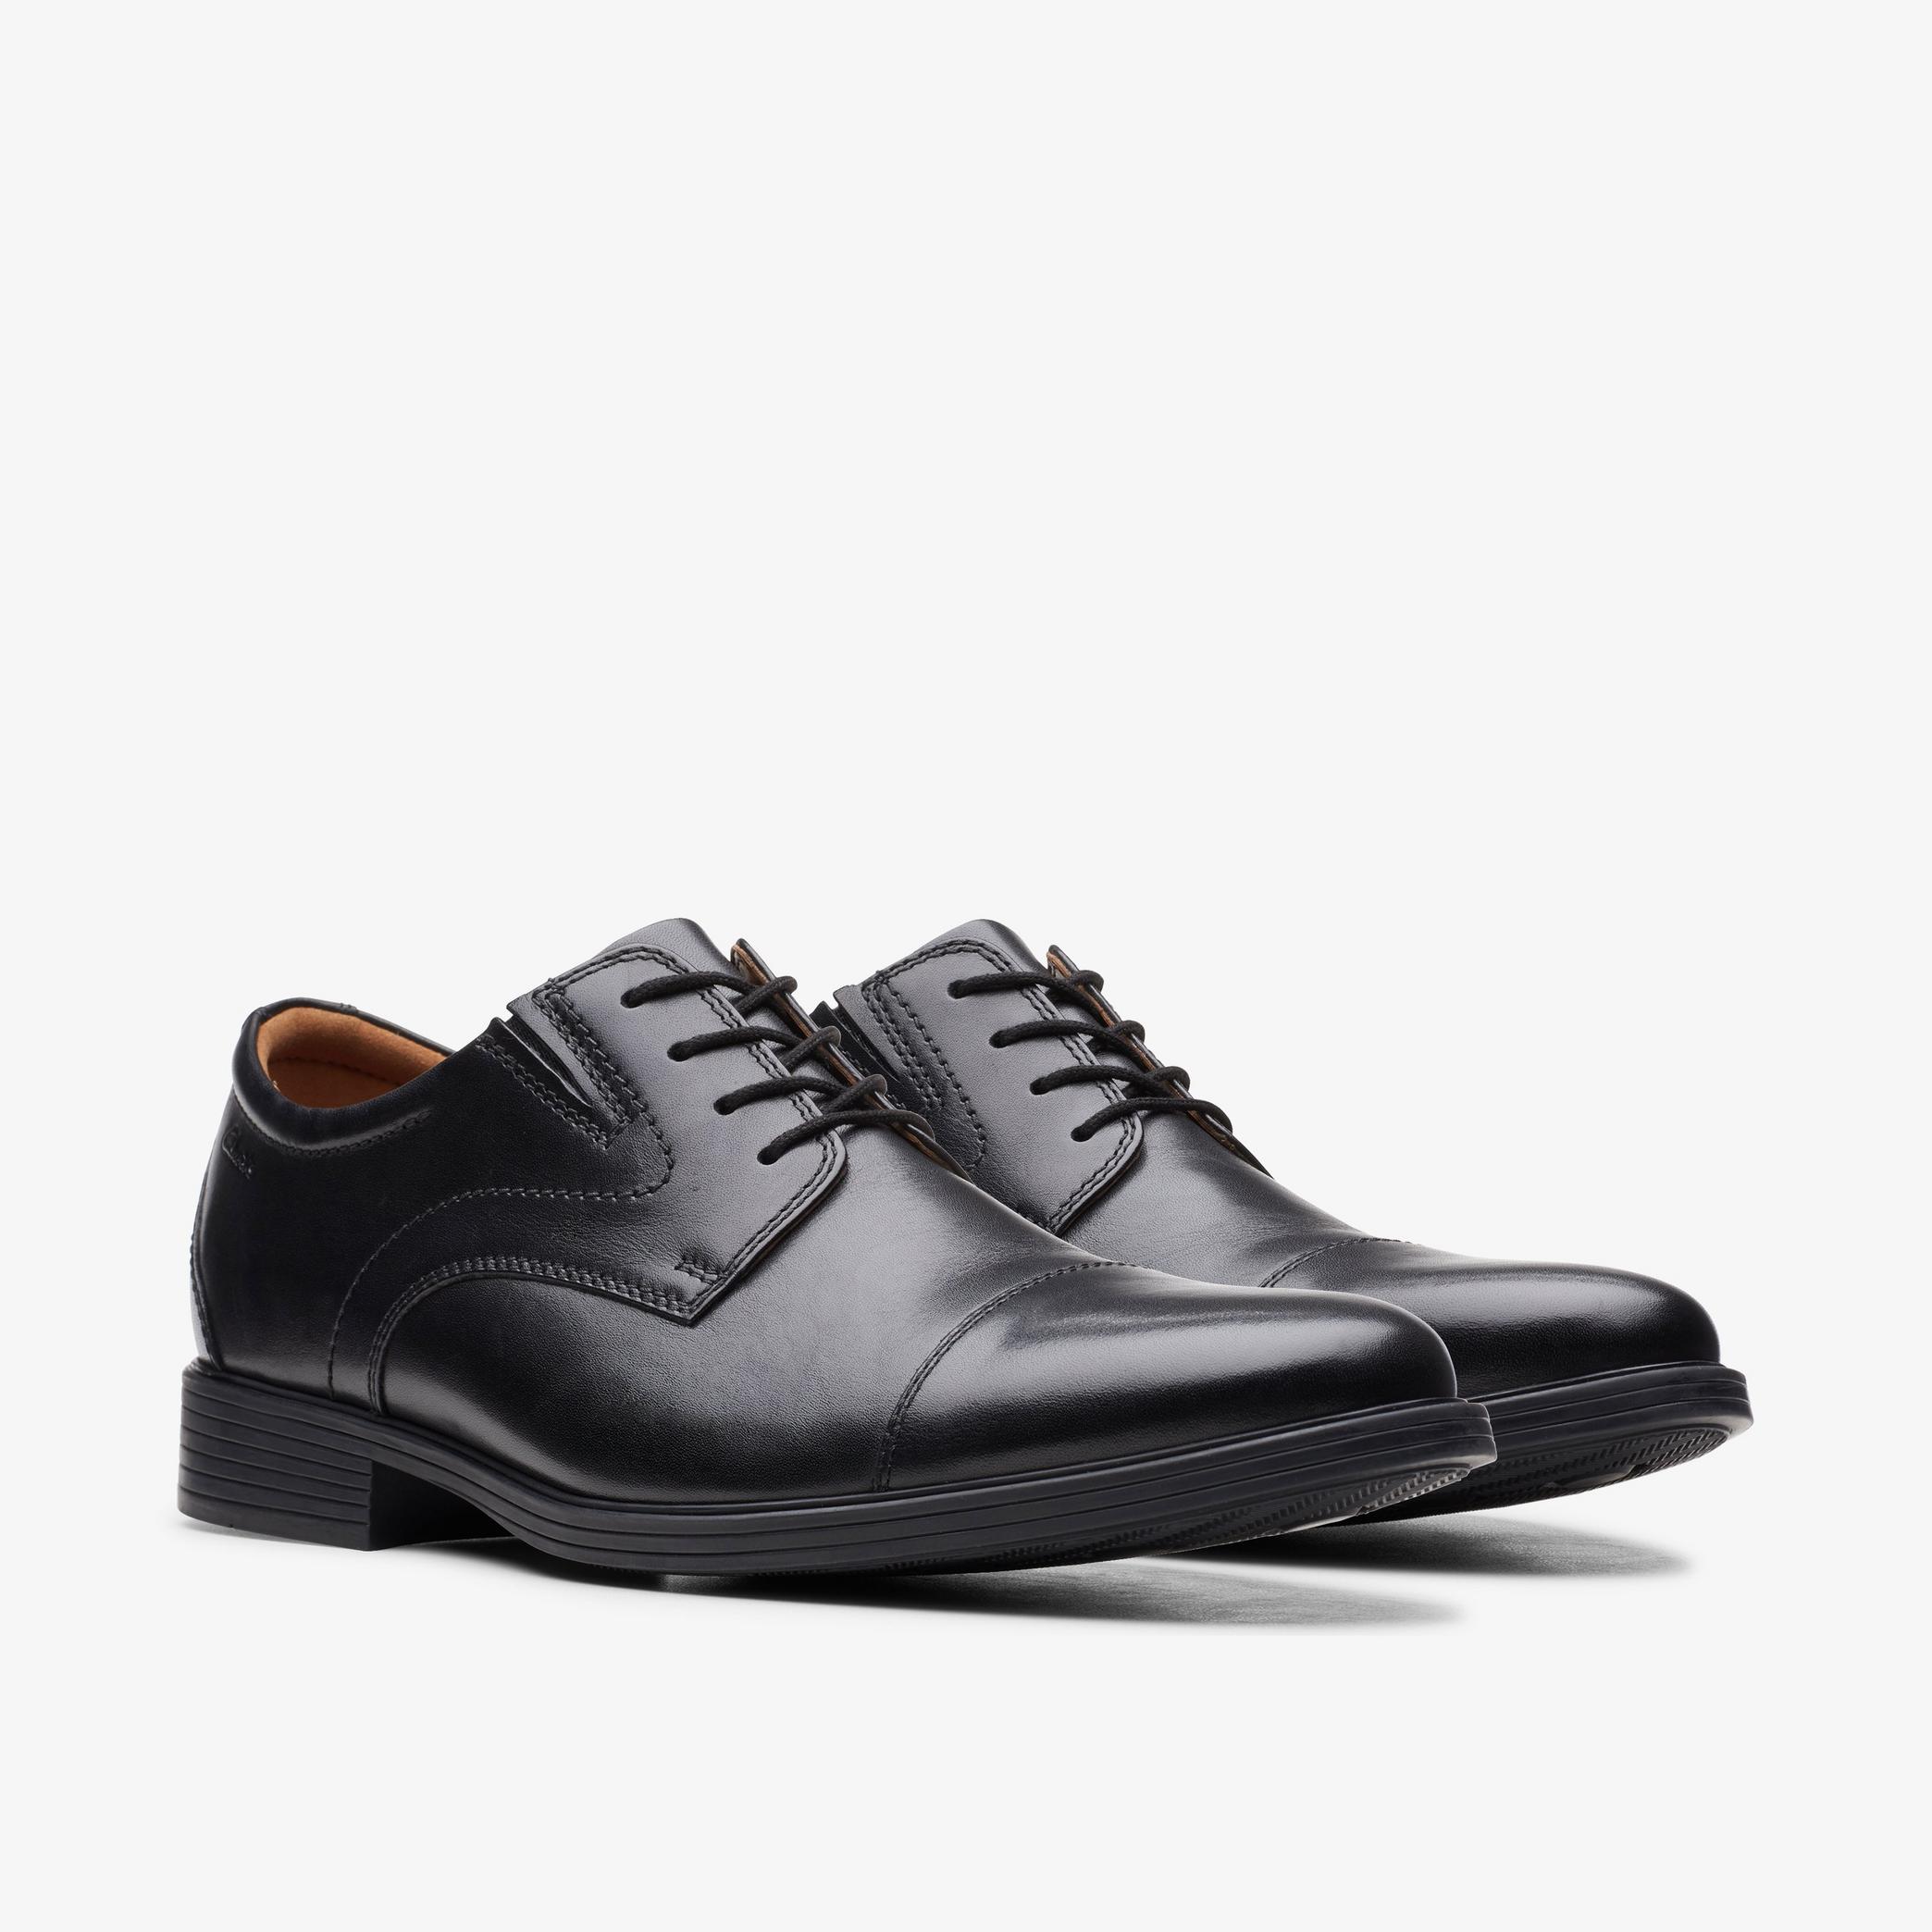 Chaussures Oxford en cuir noir Whiddon Cap, vue 4 de 6